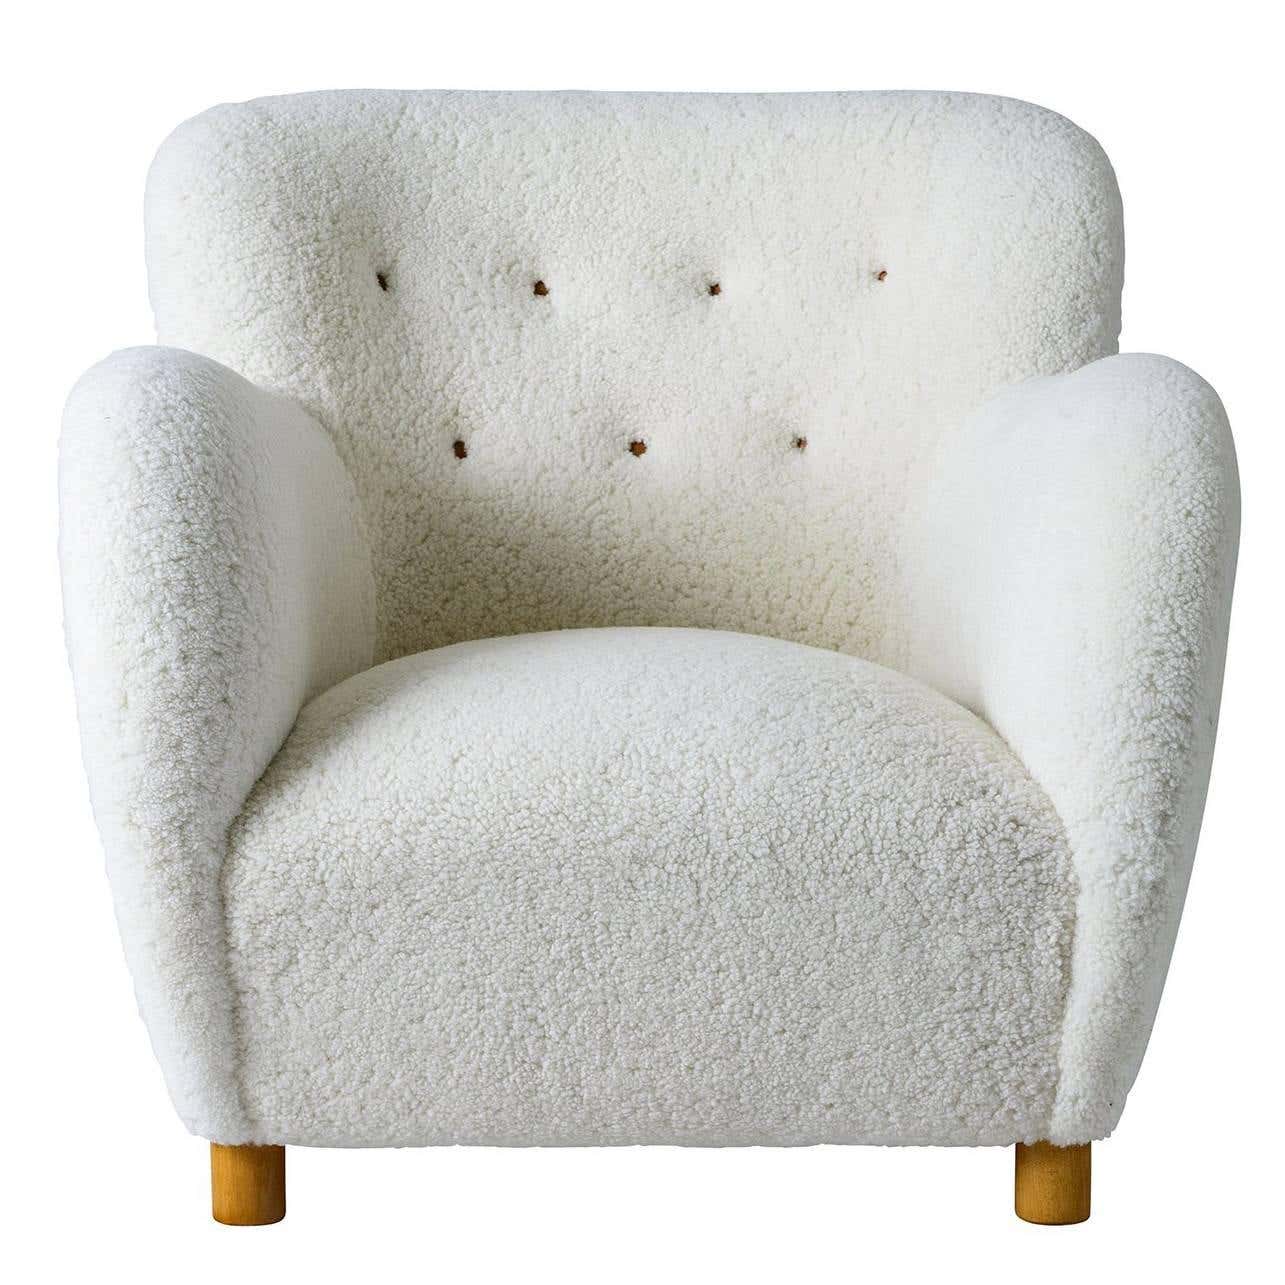 Scandinavian-inspired accent chair with sheepskin throw